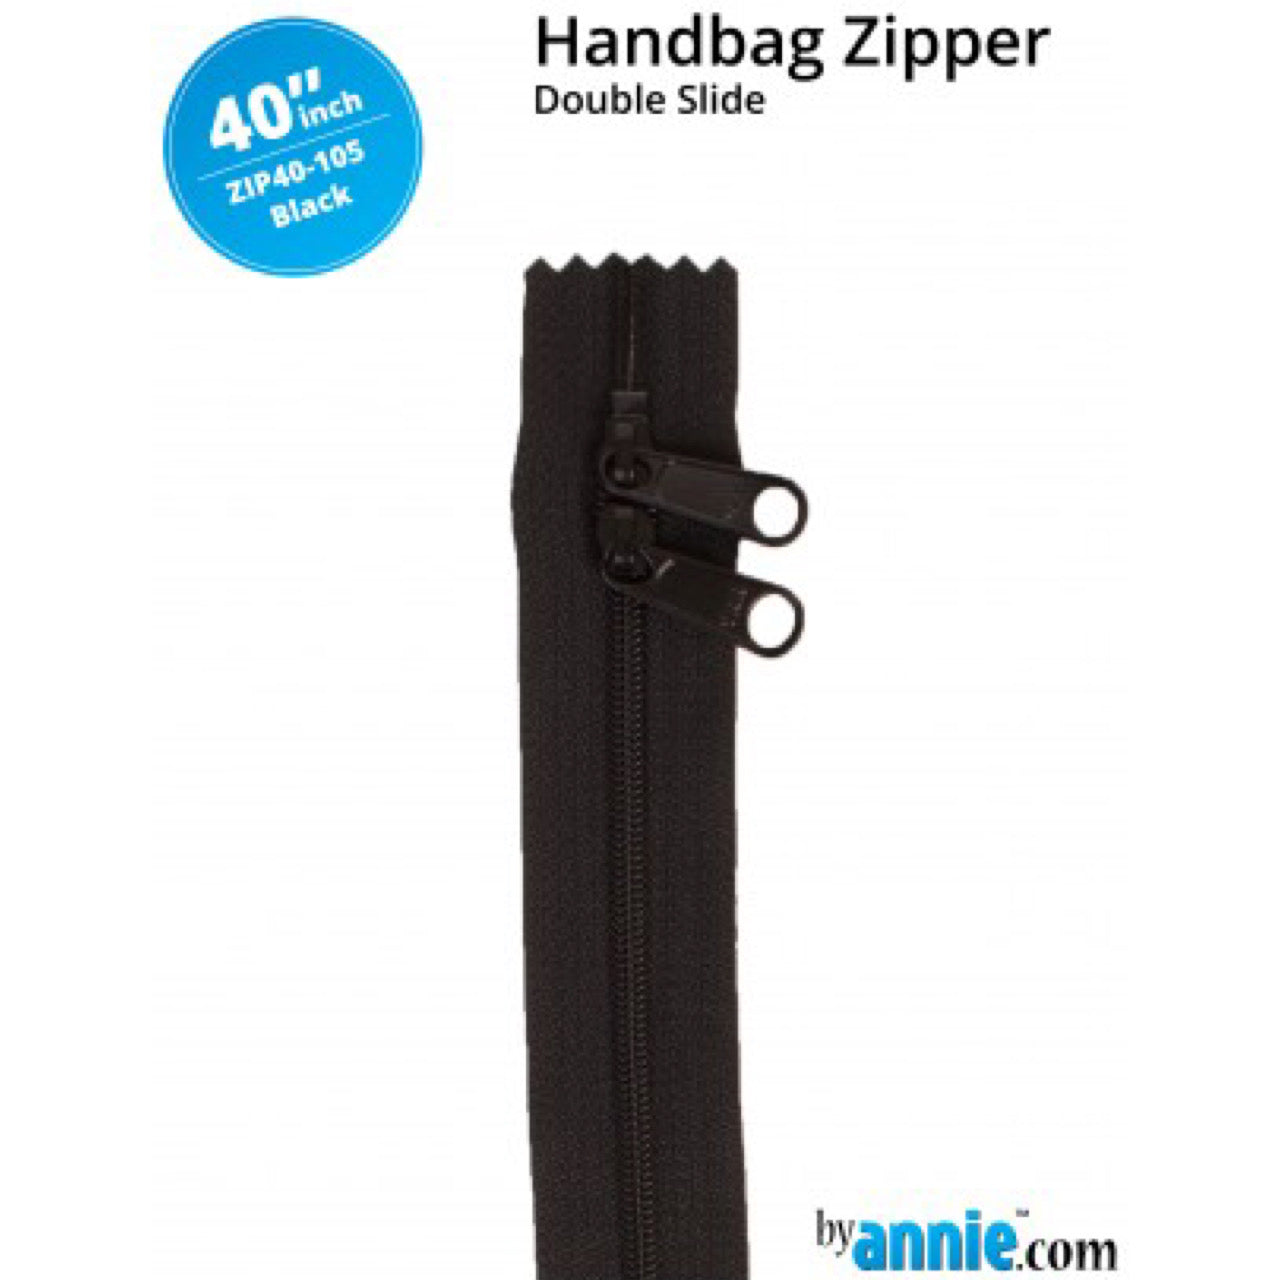 ByAnnie - 40” Double Slide Zipper - Black